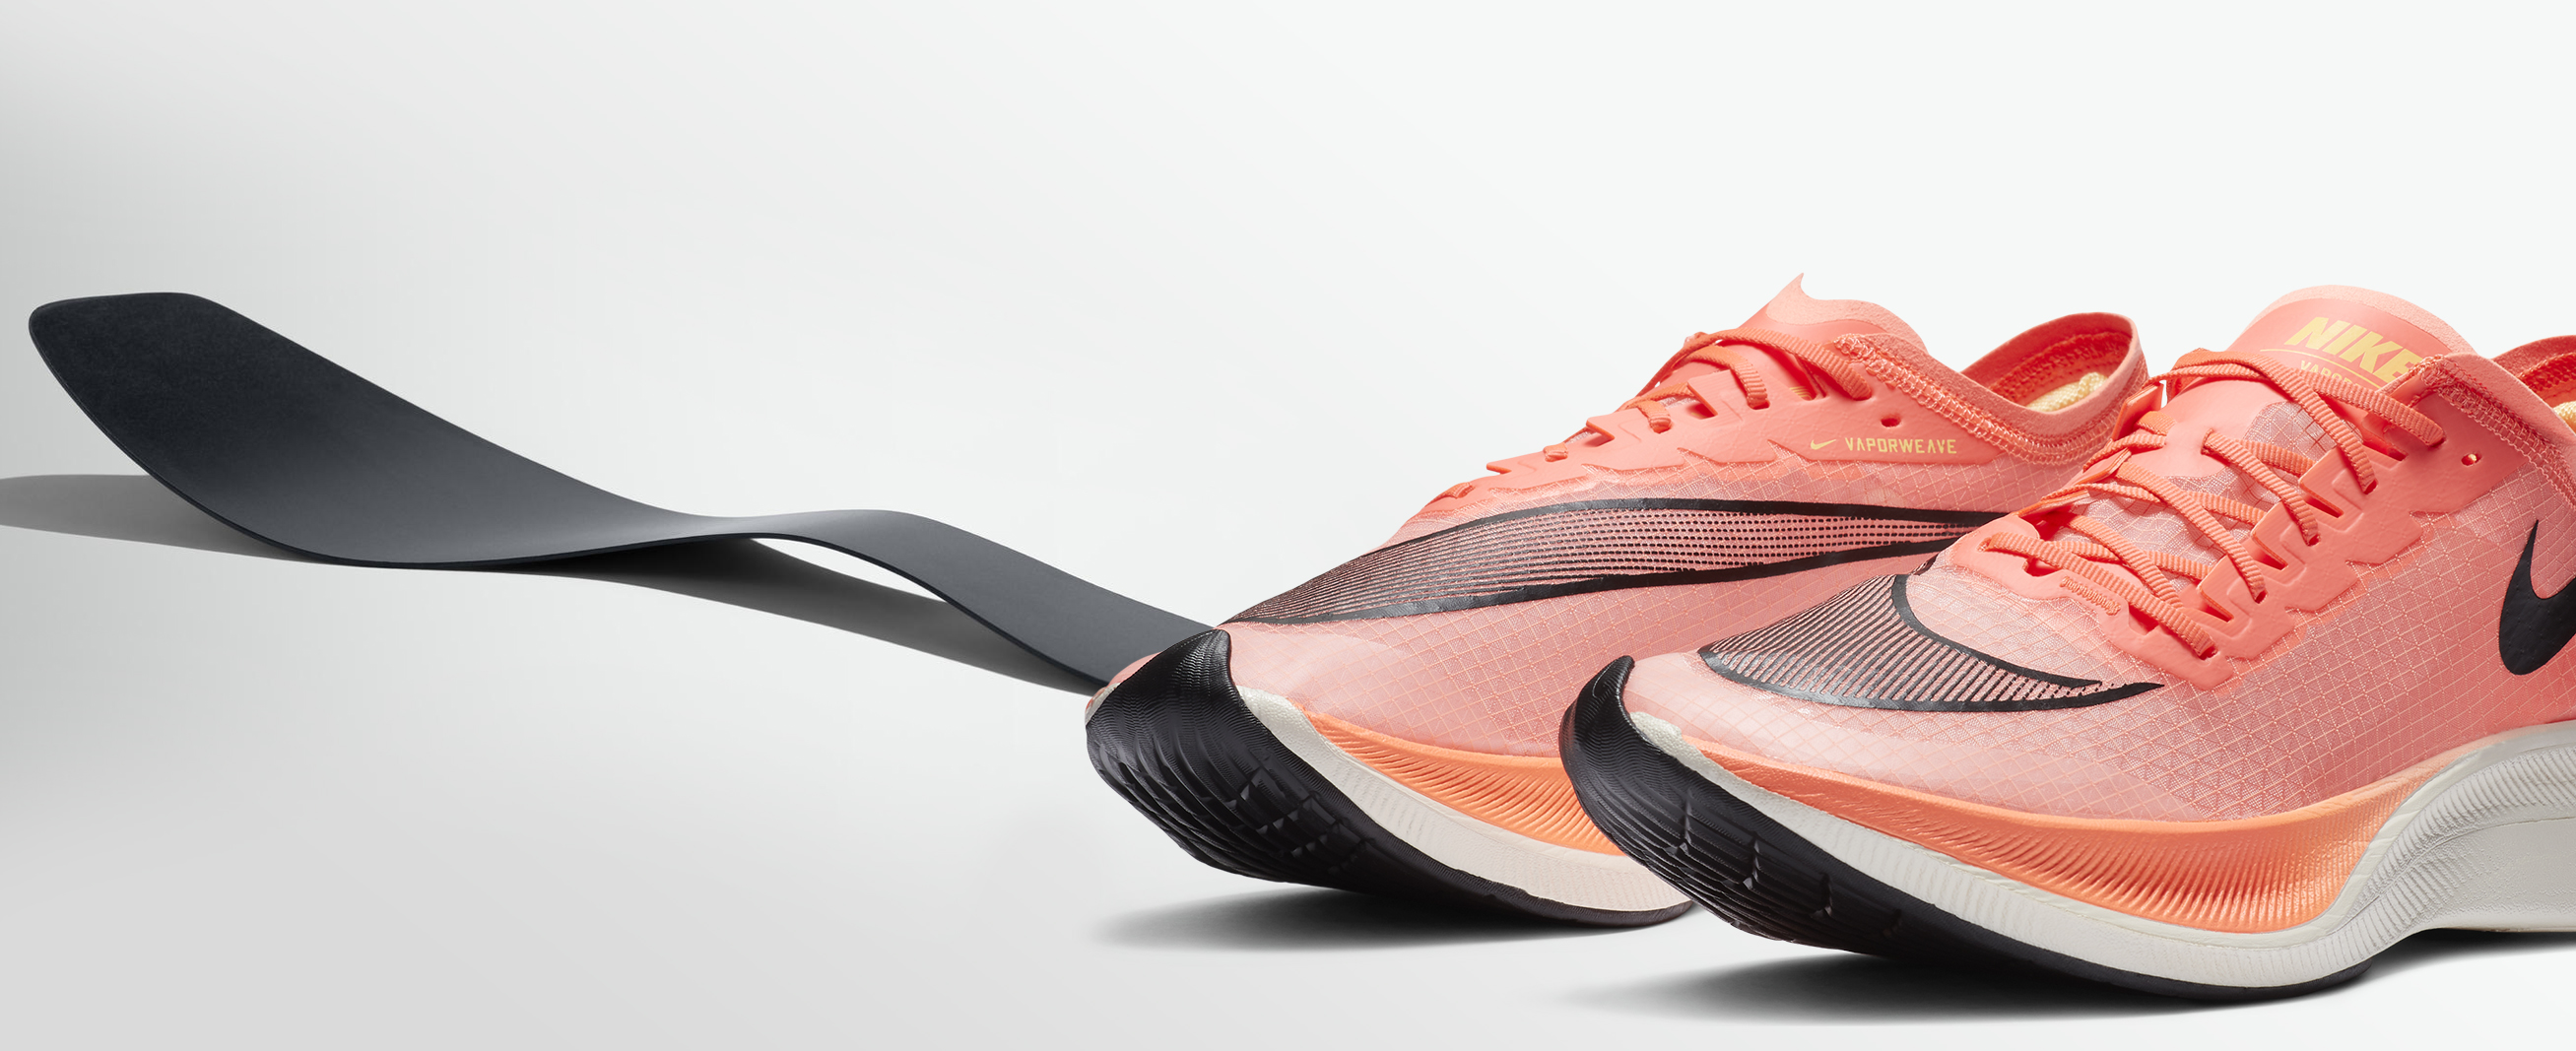 Nike Carbon Fiber Plate